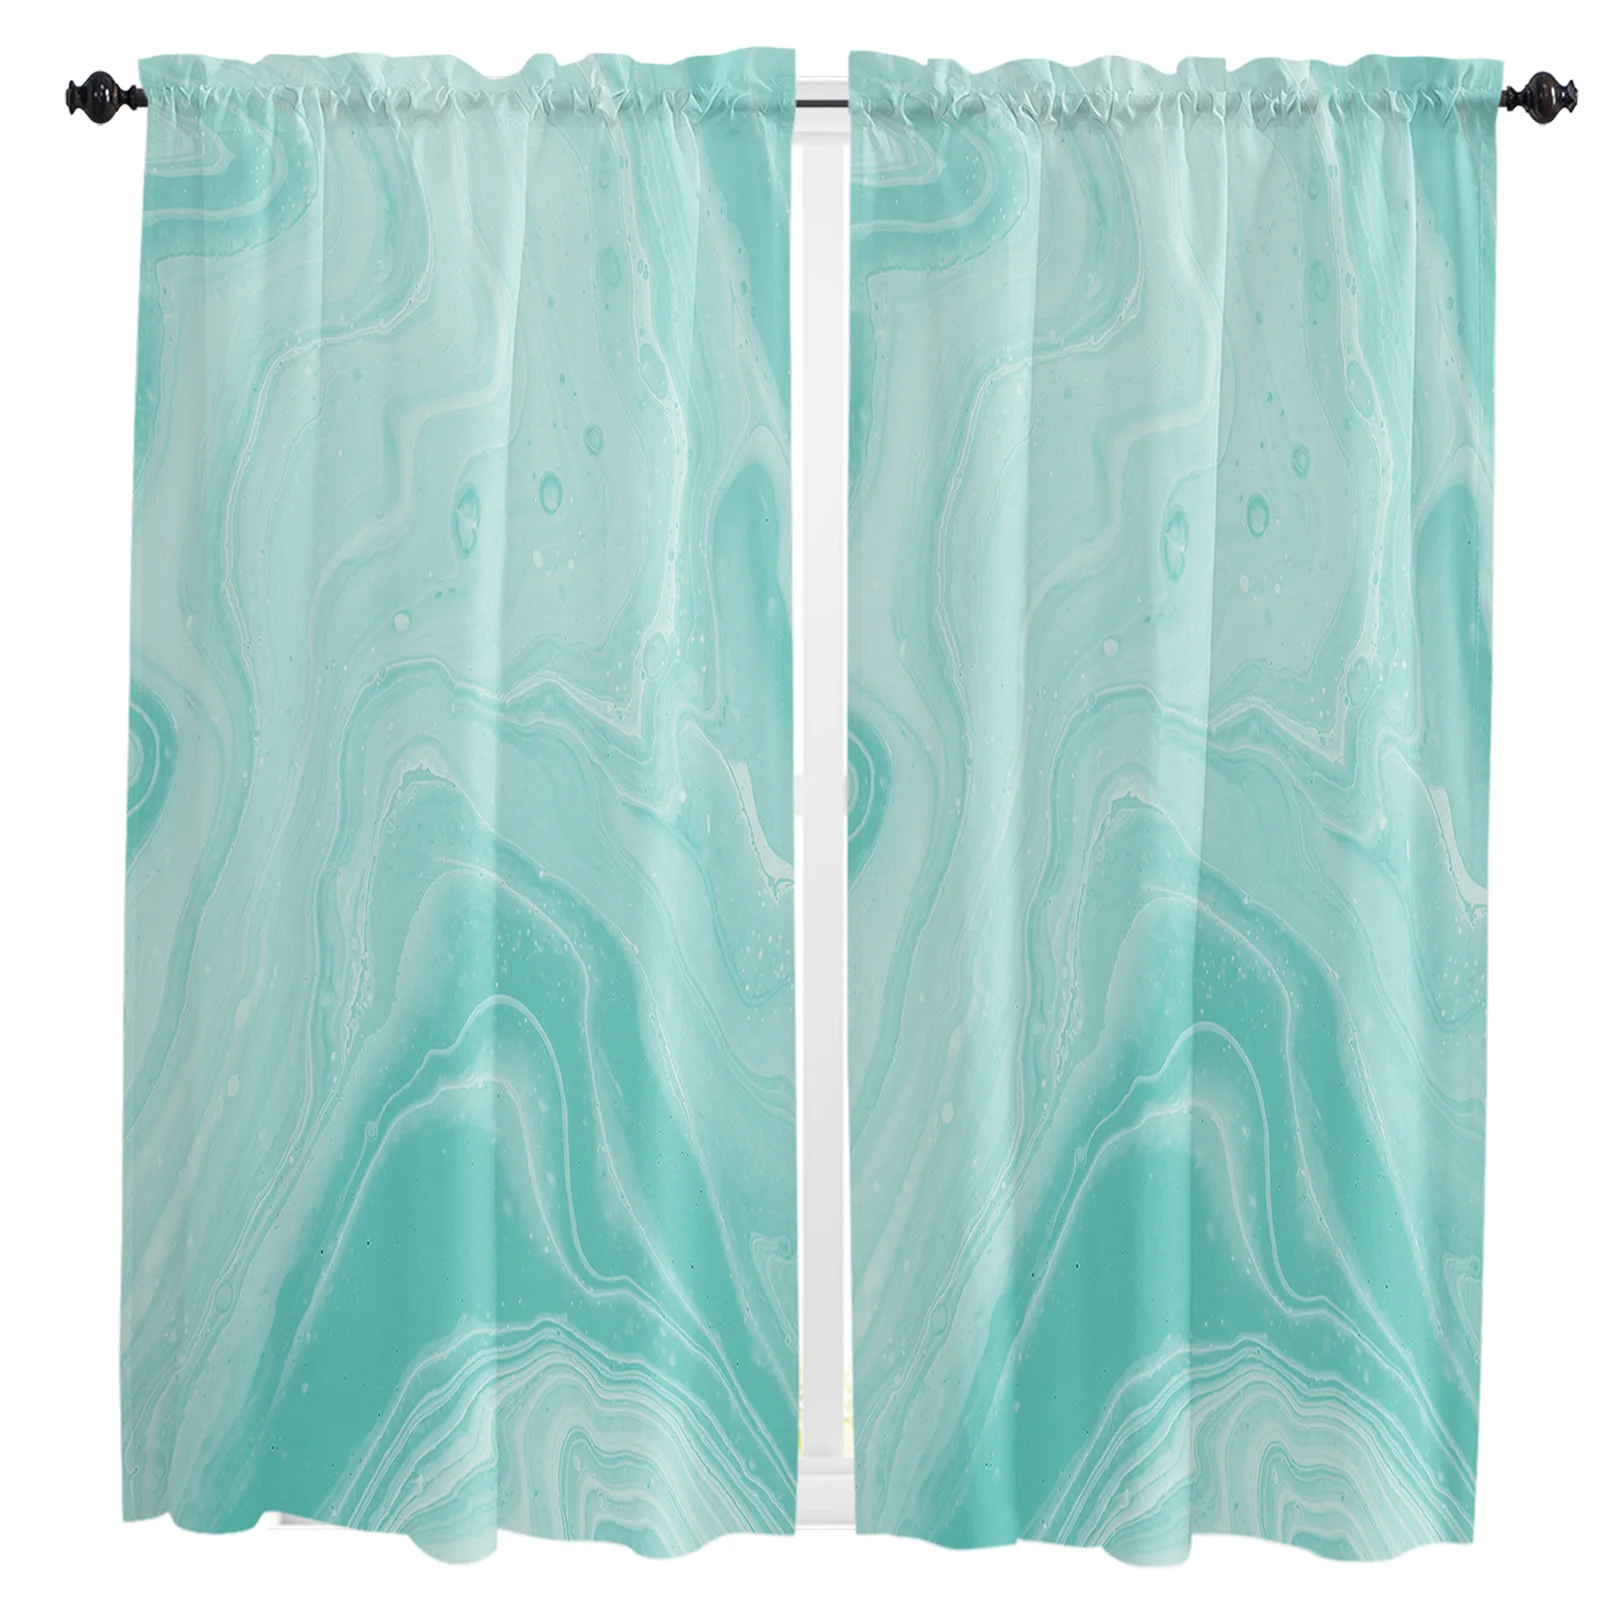 

Marble Texture Aqua Small Curtain Rod Pocket Short Curtains Half Drapes Partition Cabinet Door Window Curtains Home Decor